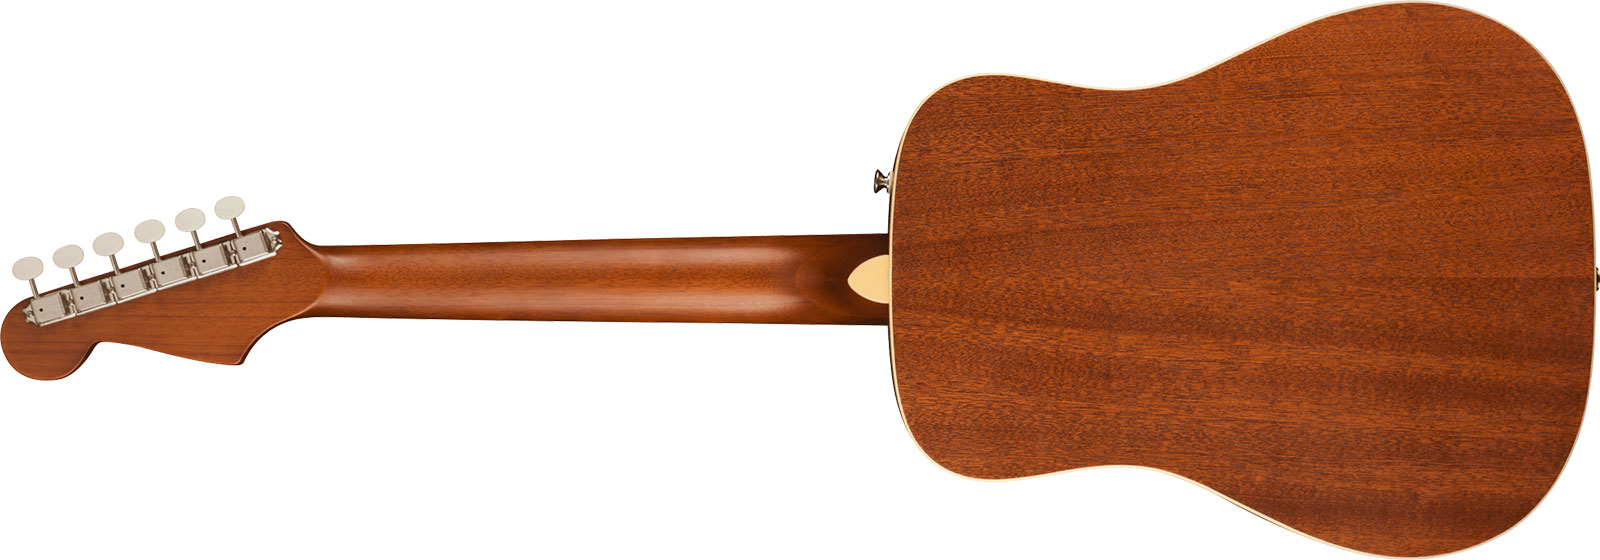 Fender Redondo Mini All Mahogany California Ltd Dreadnought 1/2 Tout Acajou Noy - Natural Satin - Travel acoustic guitar - Variation 1